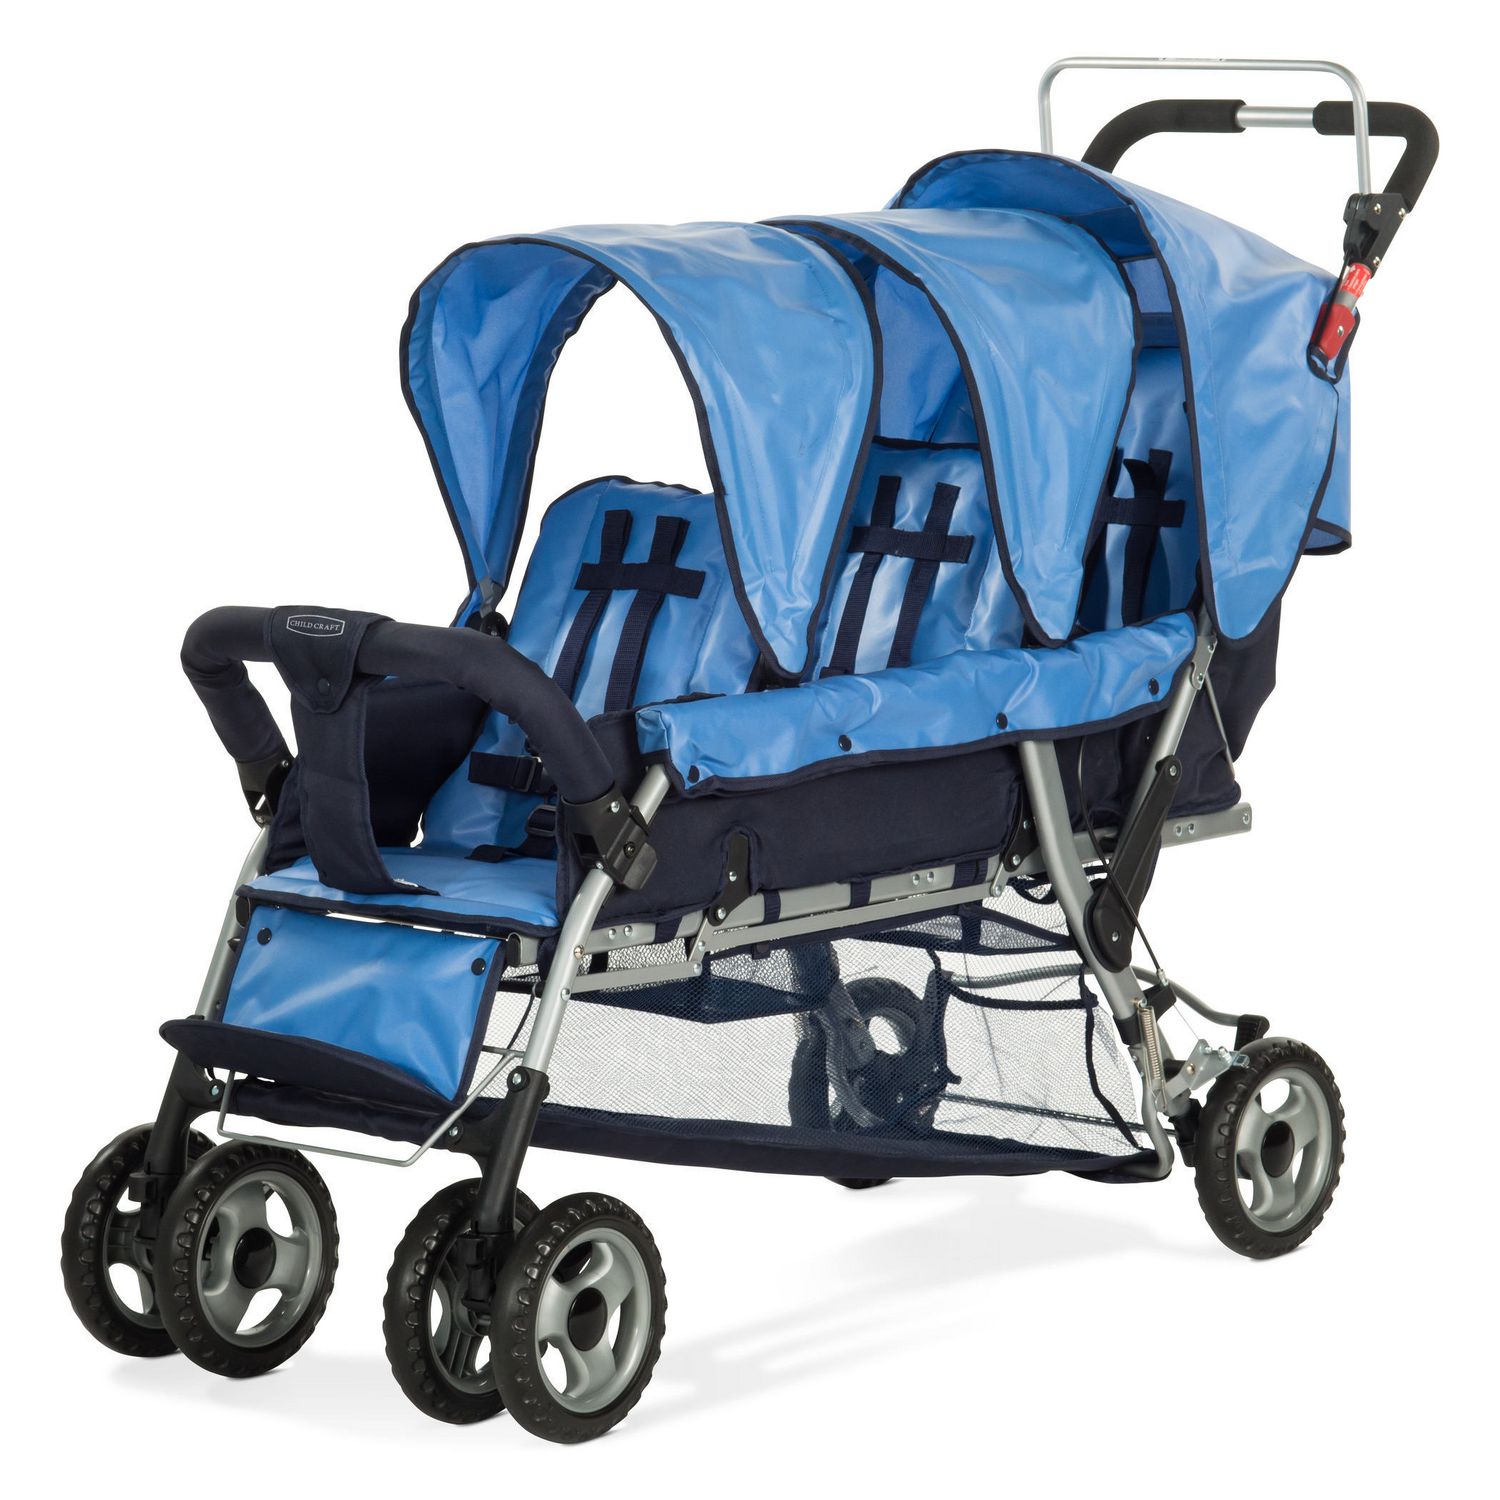 Child Craft 3-Passenger Triple Stroller 